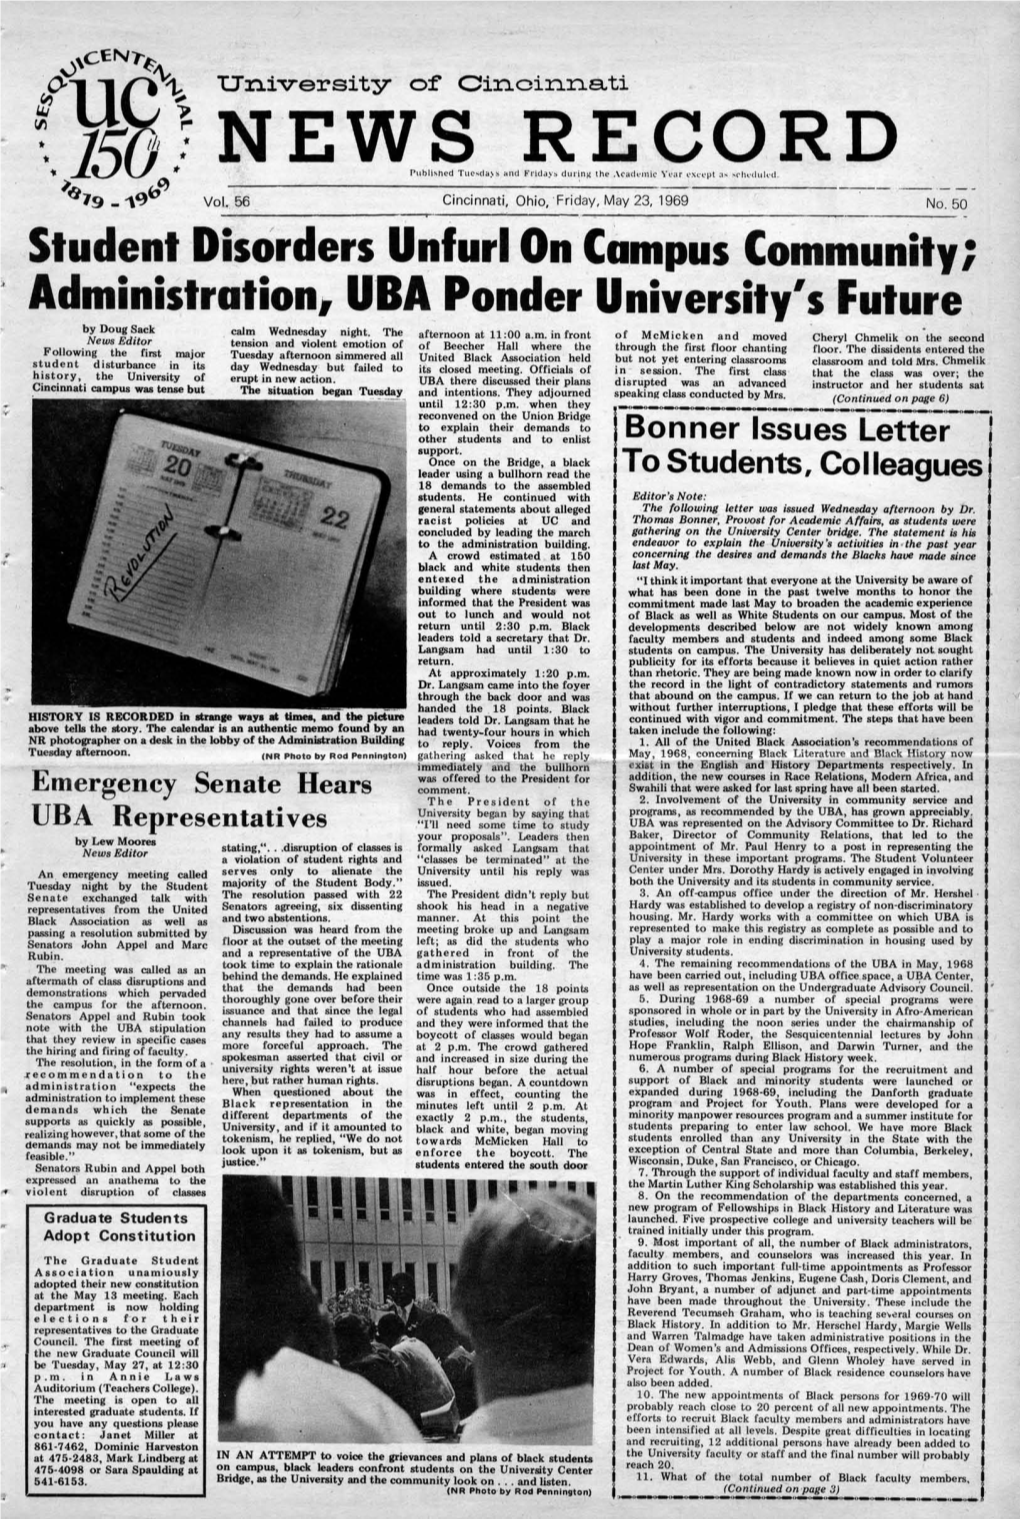 University of Cincinnati News Record. Friday, May 23, 1969. Vol. LVI, No